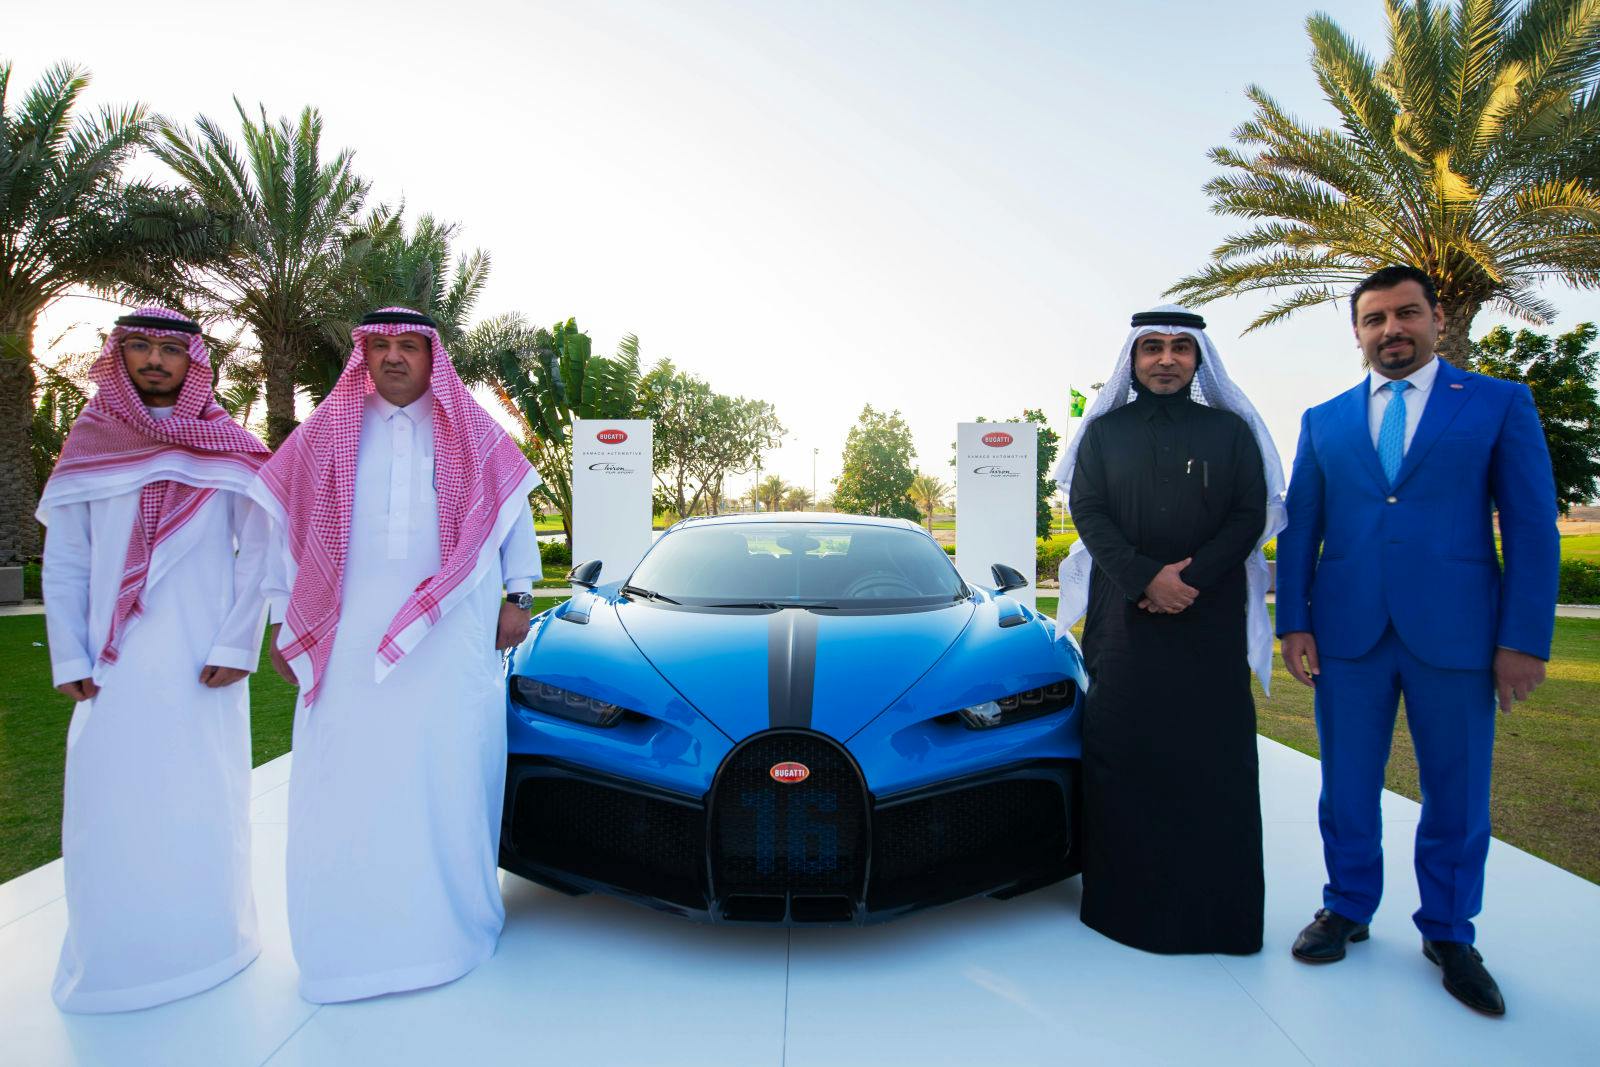 SAMACO Automotive devient nouveau concessionnaire Bugatti. Dans l’image: Mr. Yasser Sharbatly – SAMACO Automotive Board Member, Mr. Mohammed Raffa - SAMACO Automotive CEO, Mr. Nizar Al Karim - Bugatti KSA Brand Manager, Mr. Abdulaziz Sharbatly (de droite à gauche)